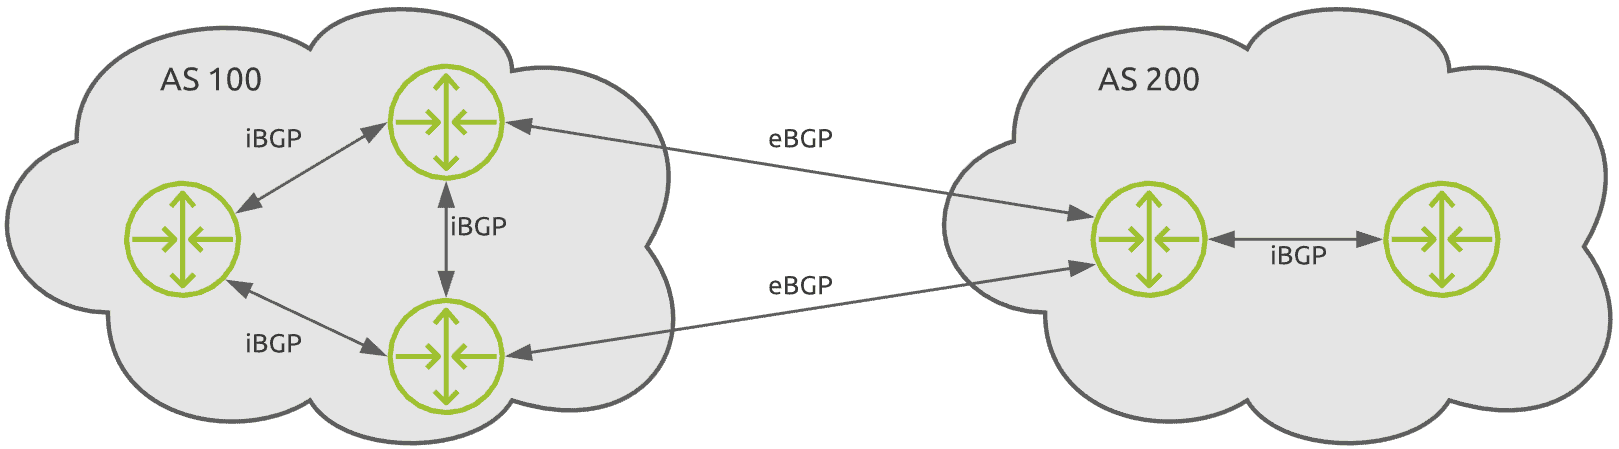 eBPG vs iBPG routing protocols